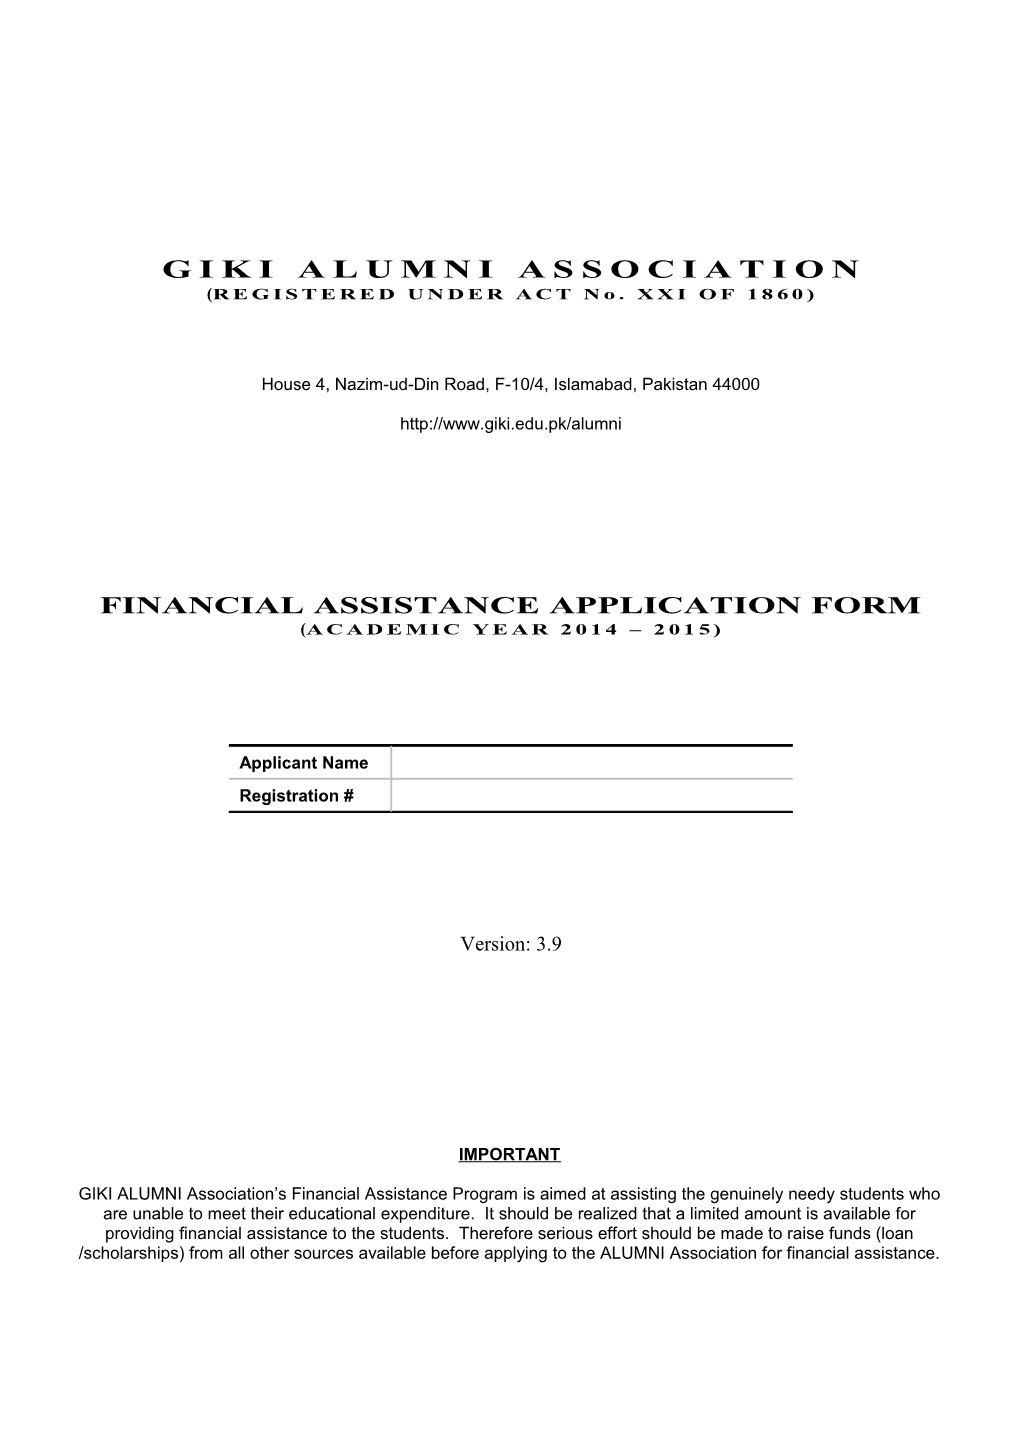 GIKIAA Financial Assistance Program 2014 2015